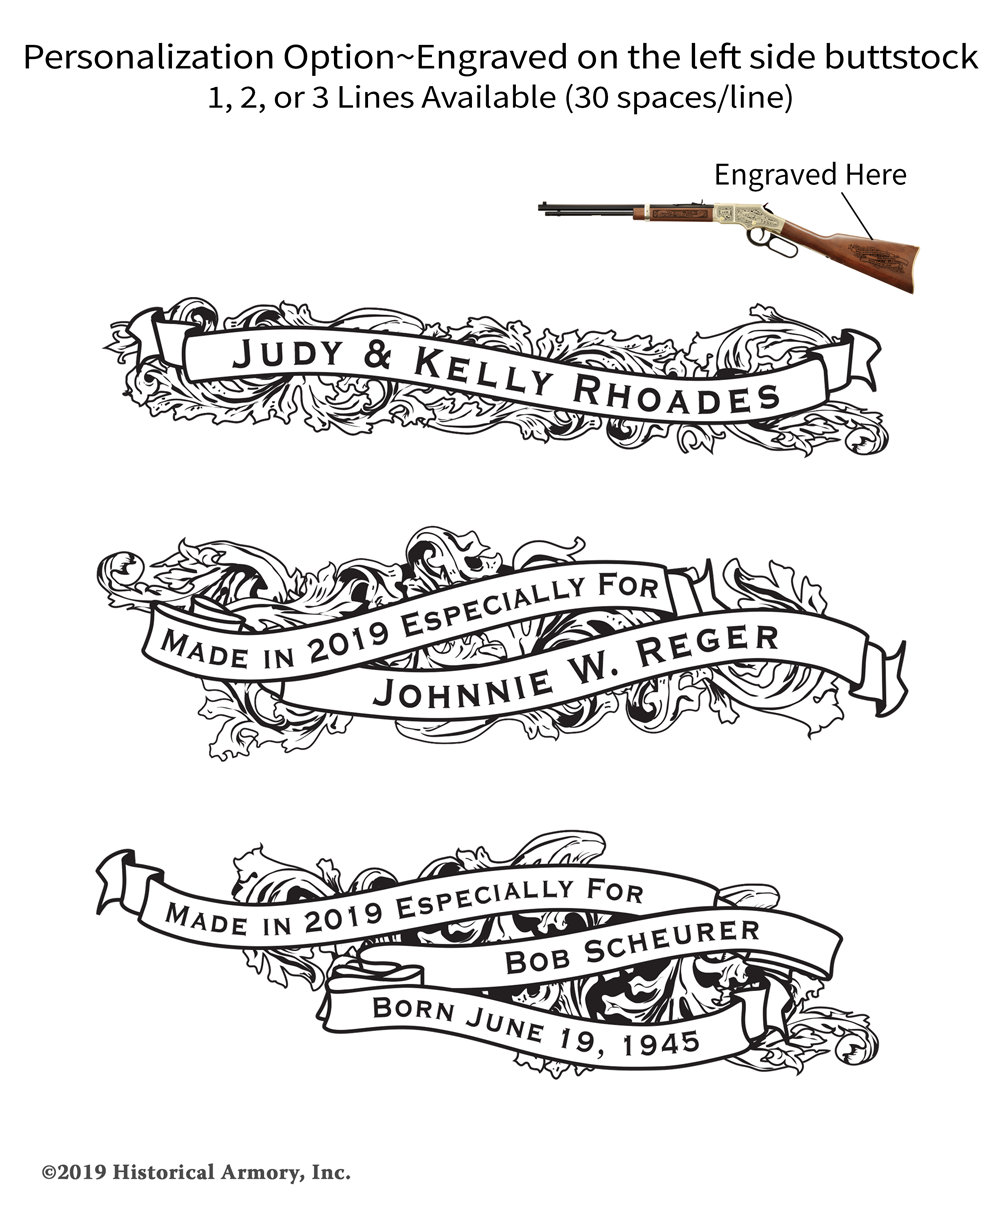 Gloucester County Virginia Engraved Rifle